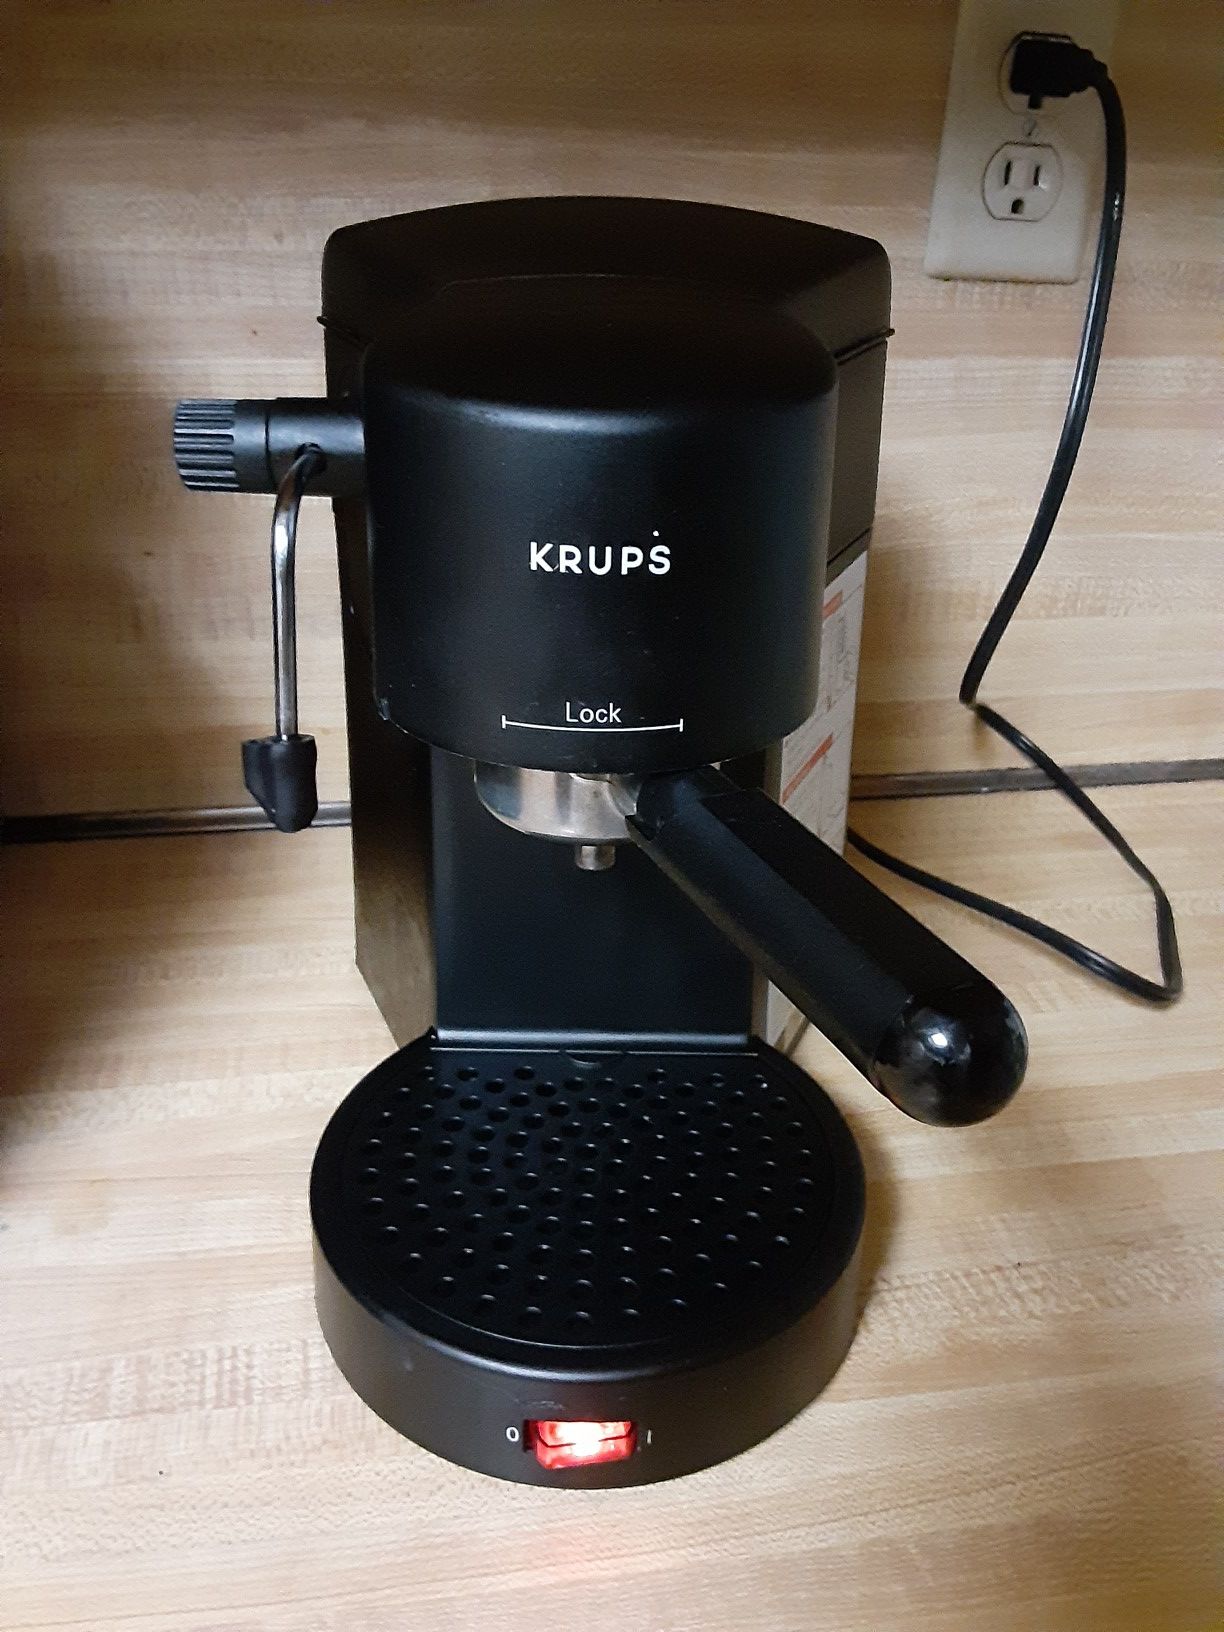 Krups espresso n late maker